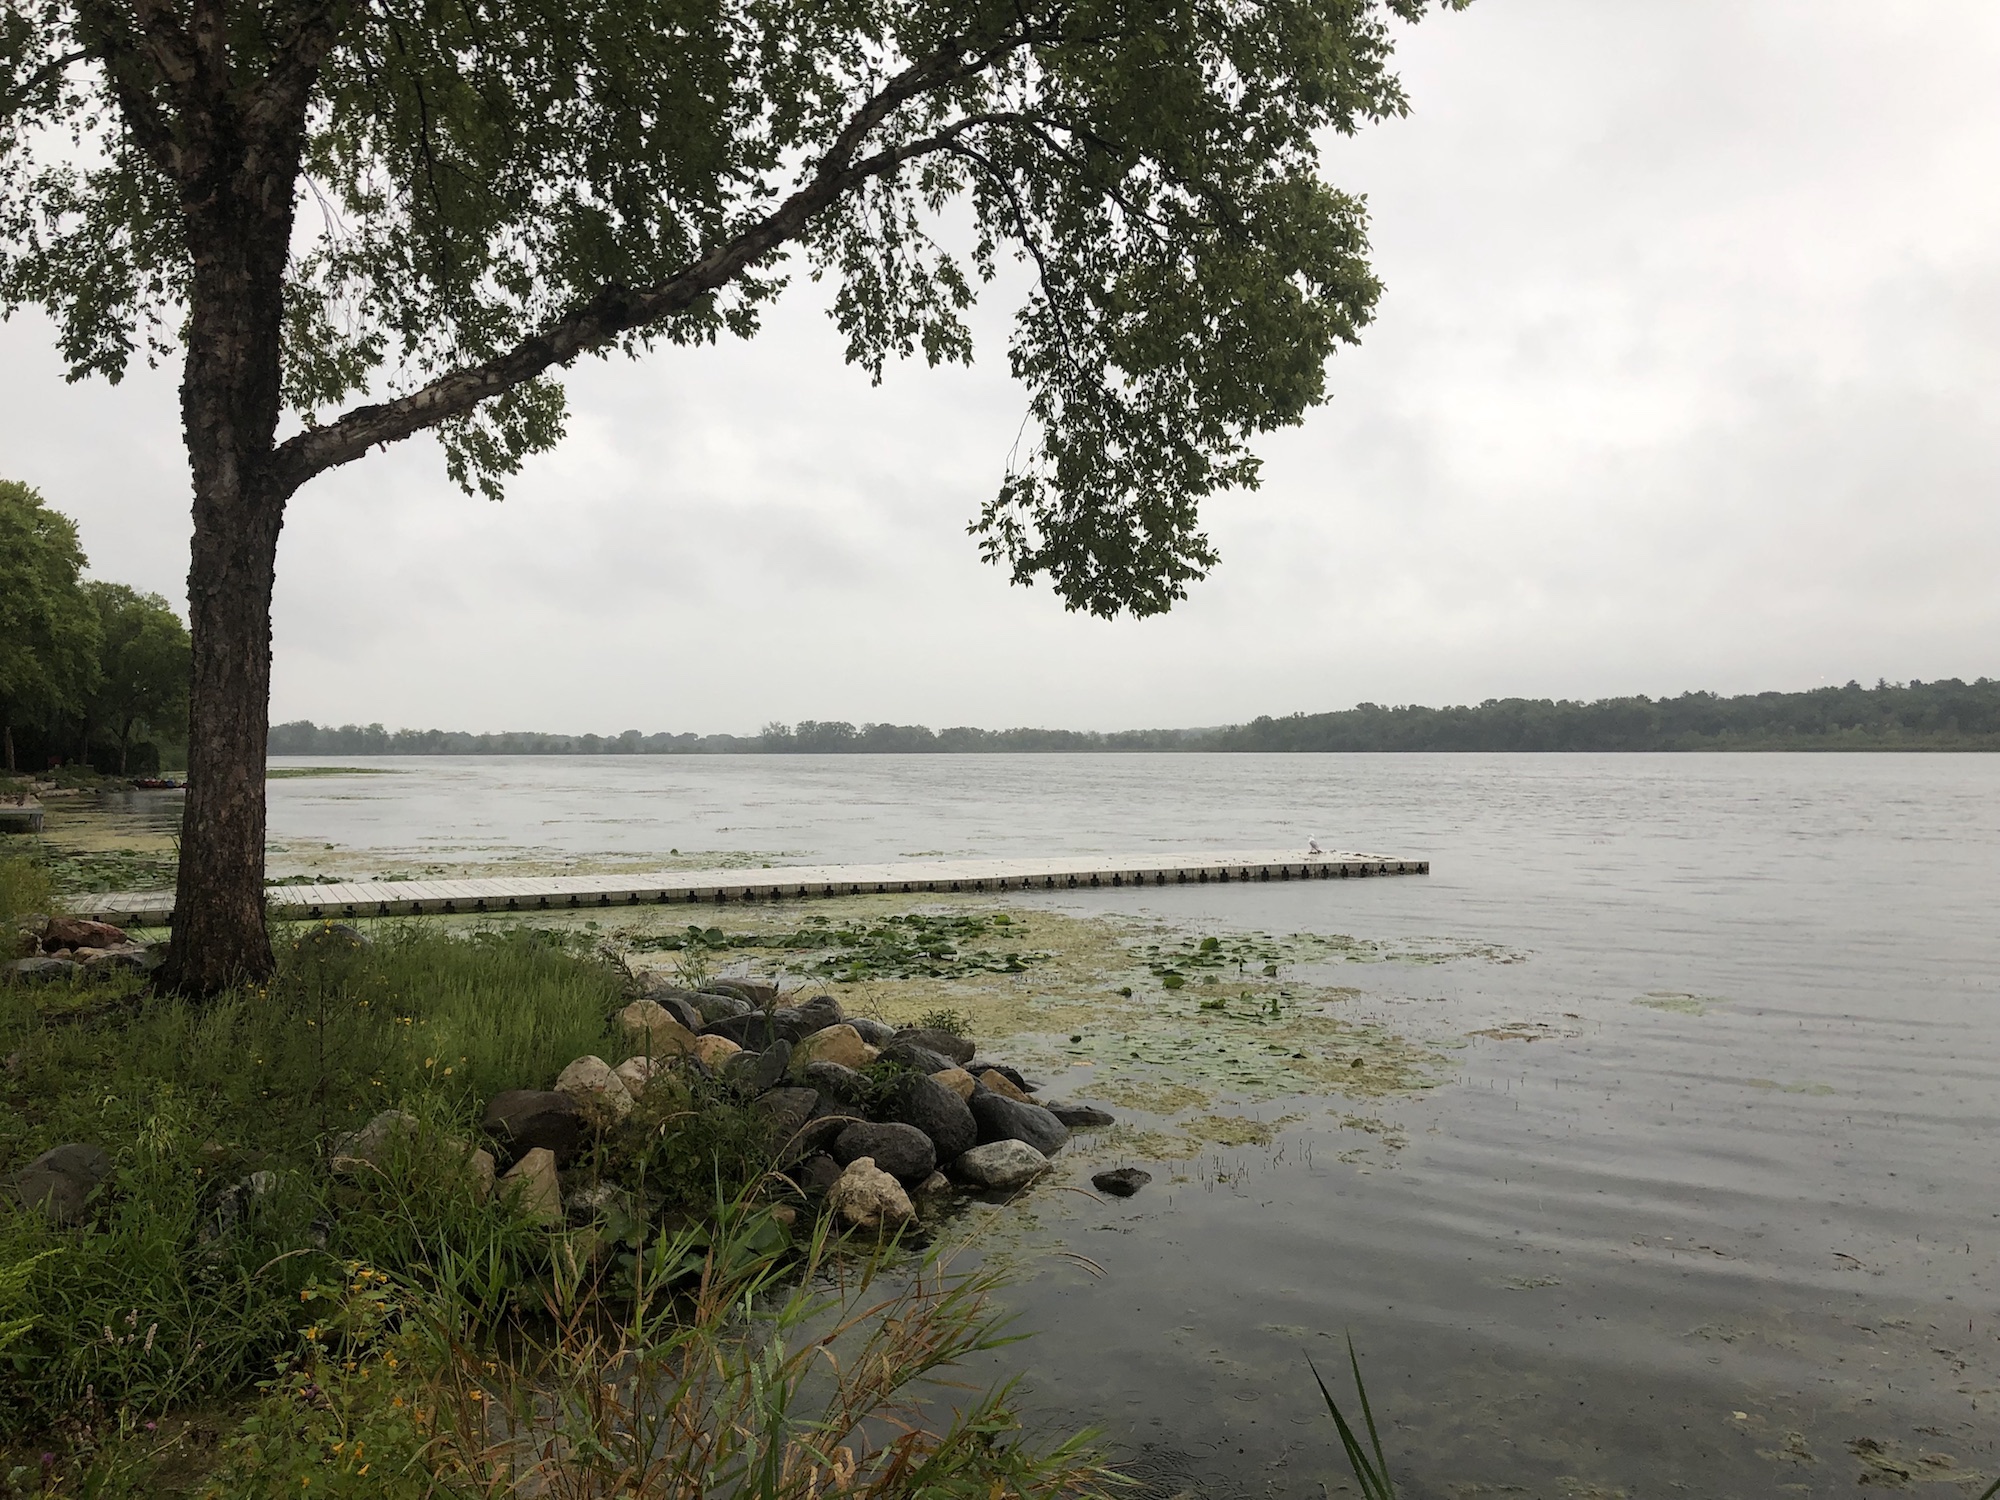 Lake Wingra on August 26, 2019.